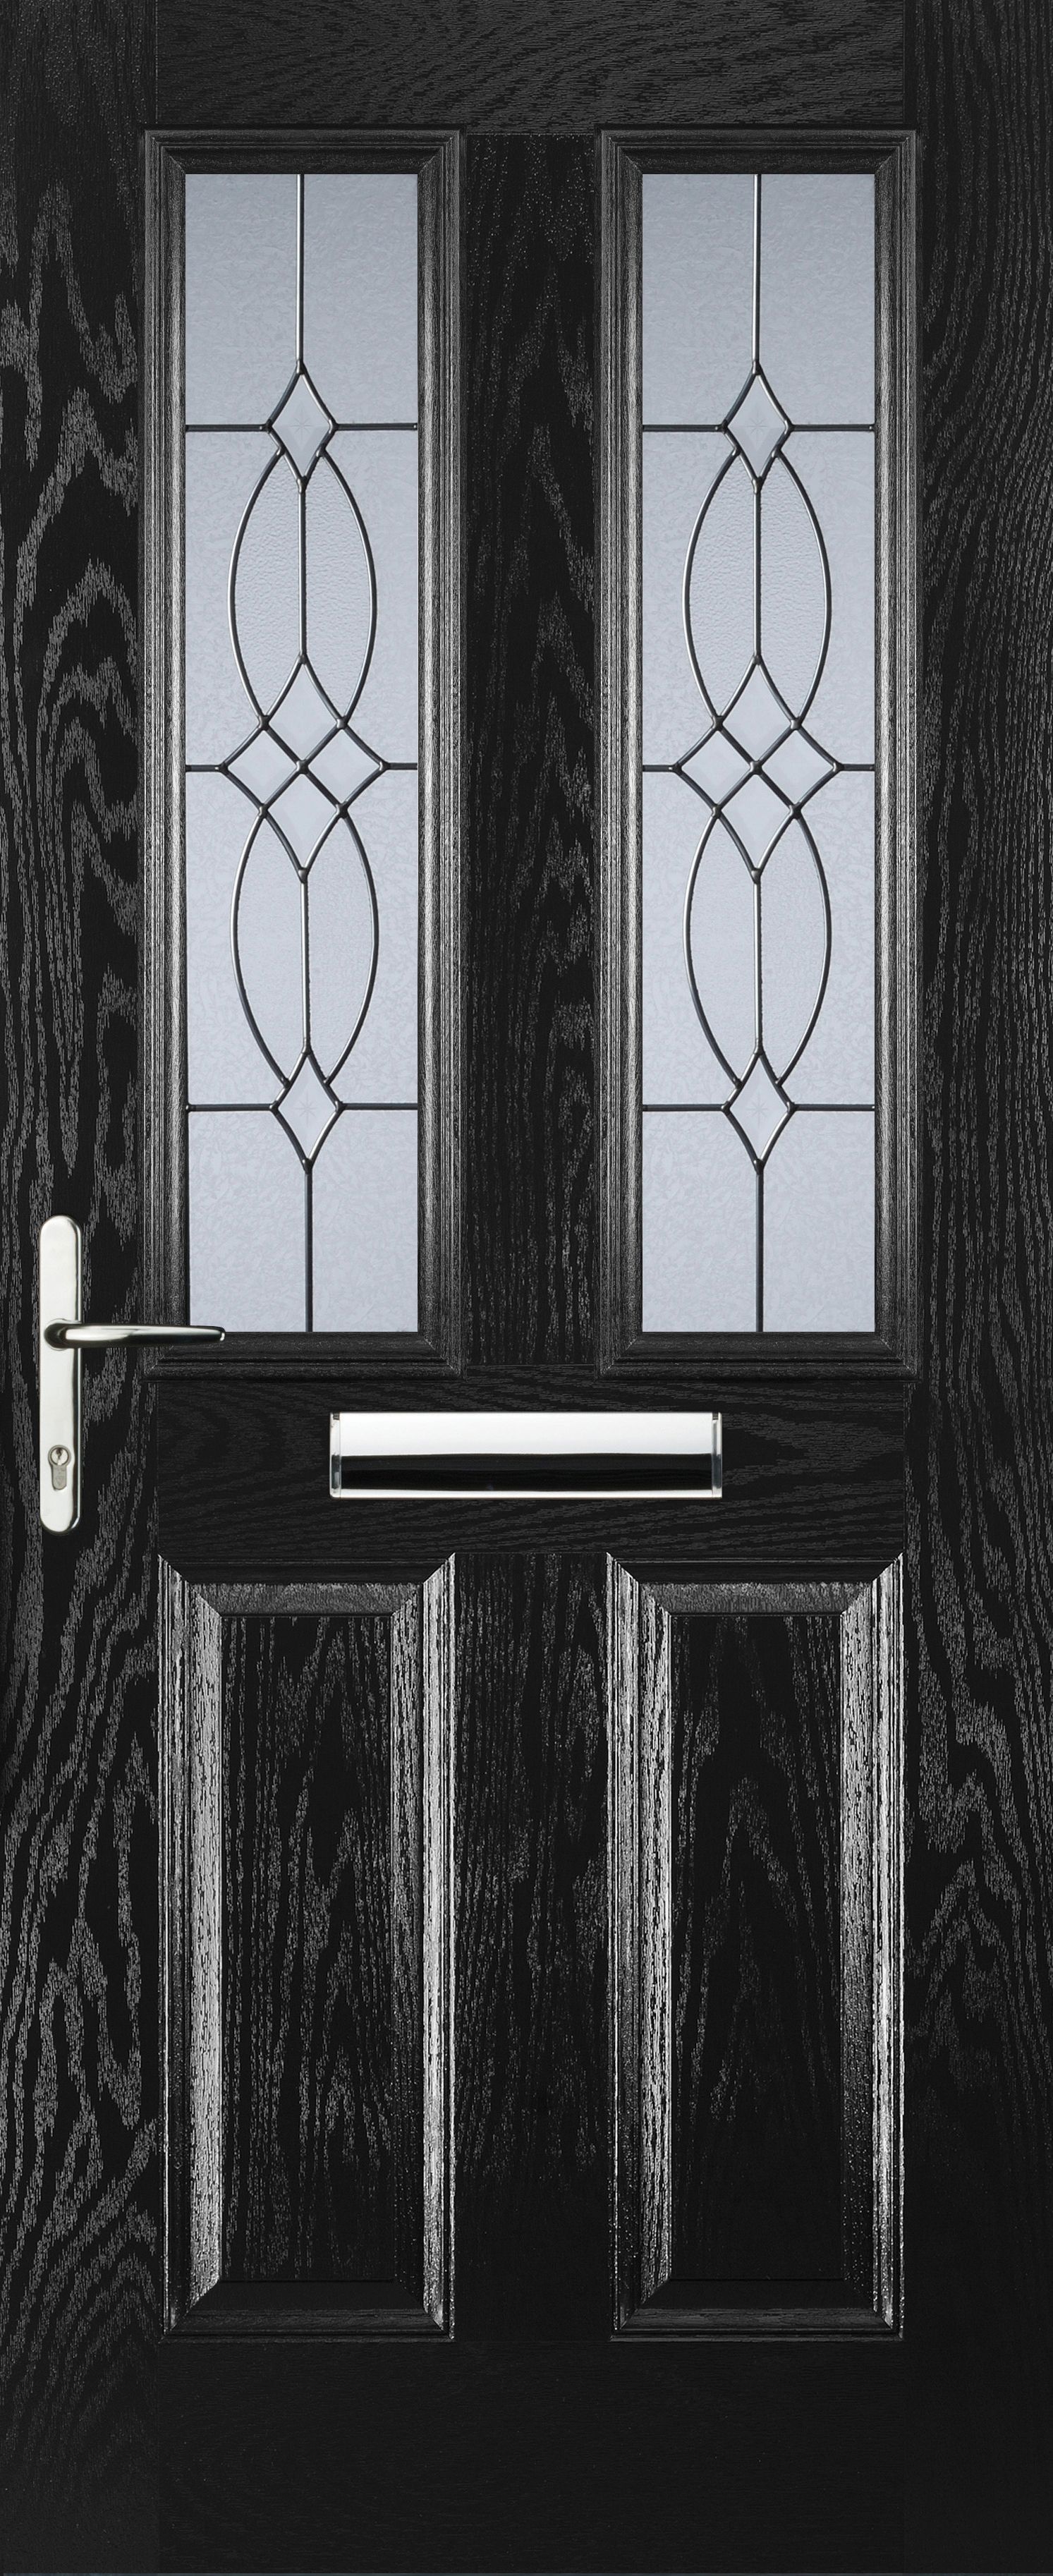 Image of Euramax 2 Panel 2 Square Right Hand Black Composite Door - 880 x 2100mm